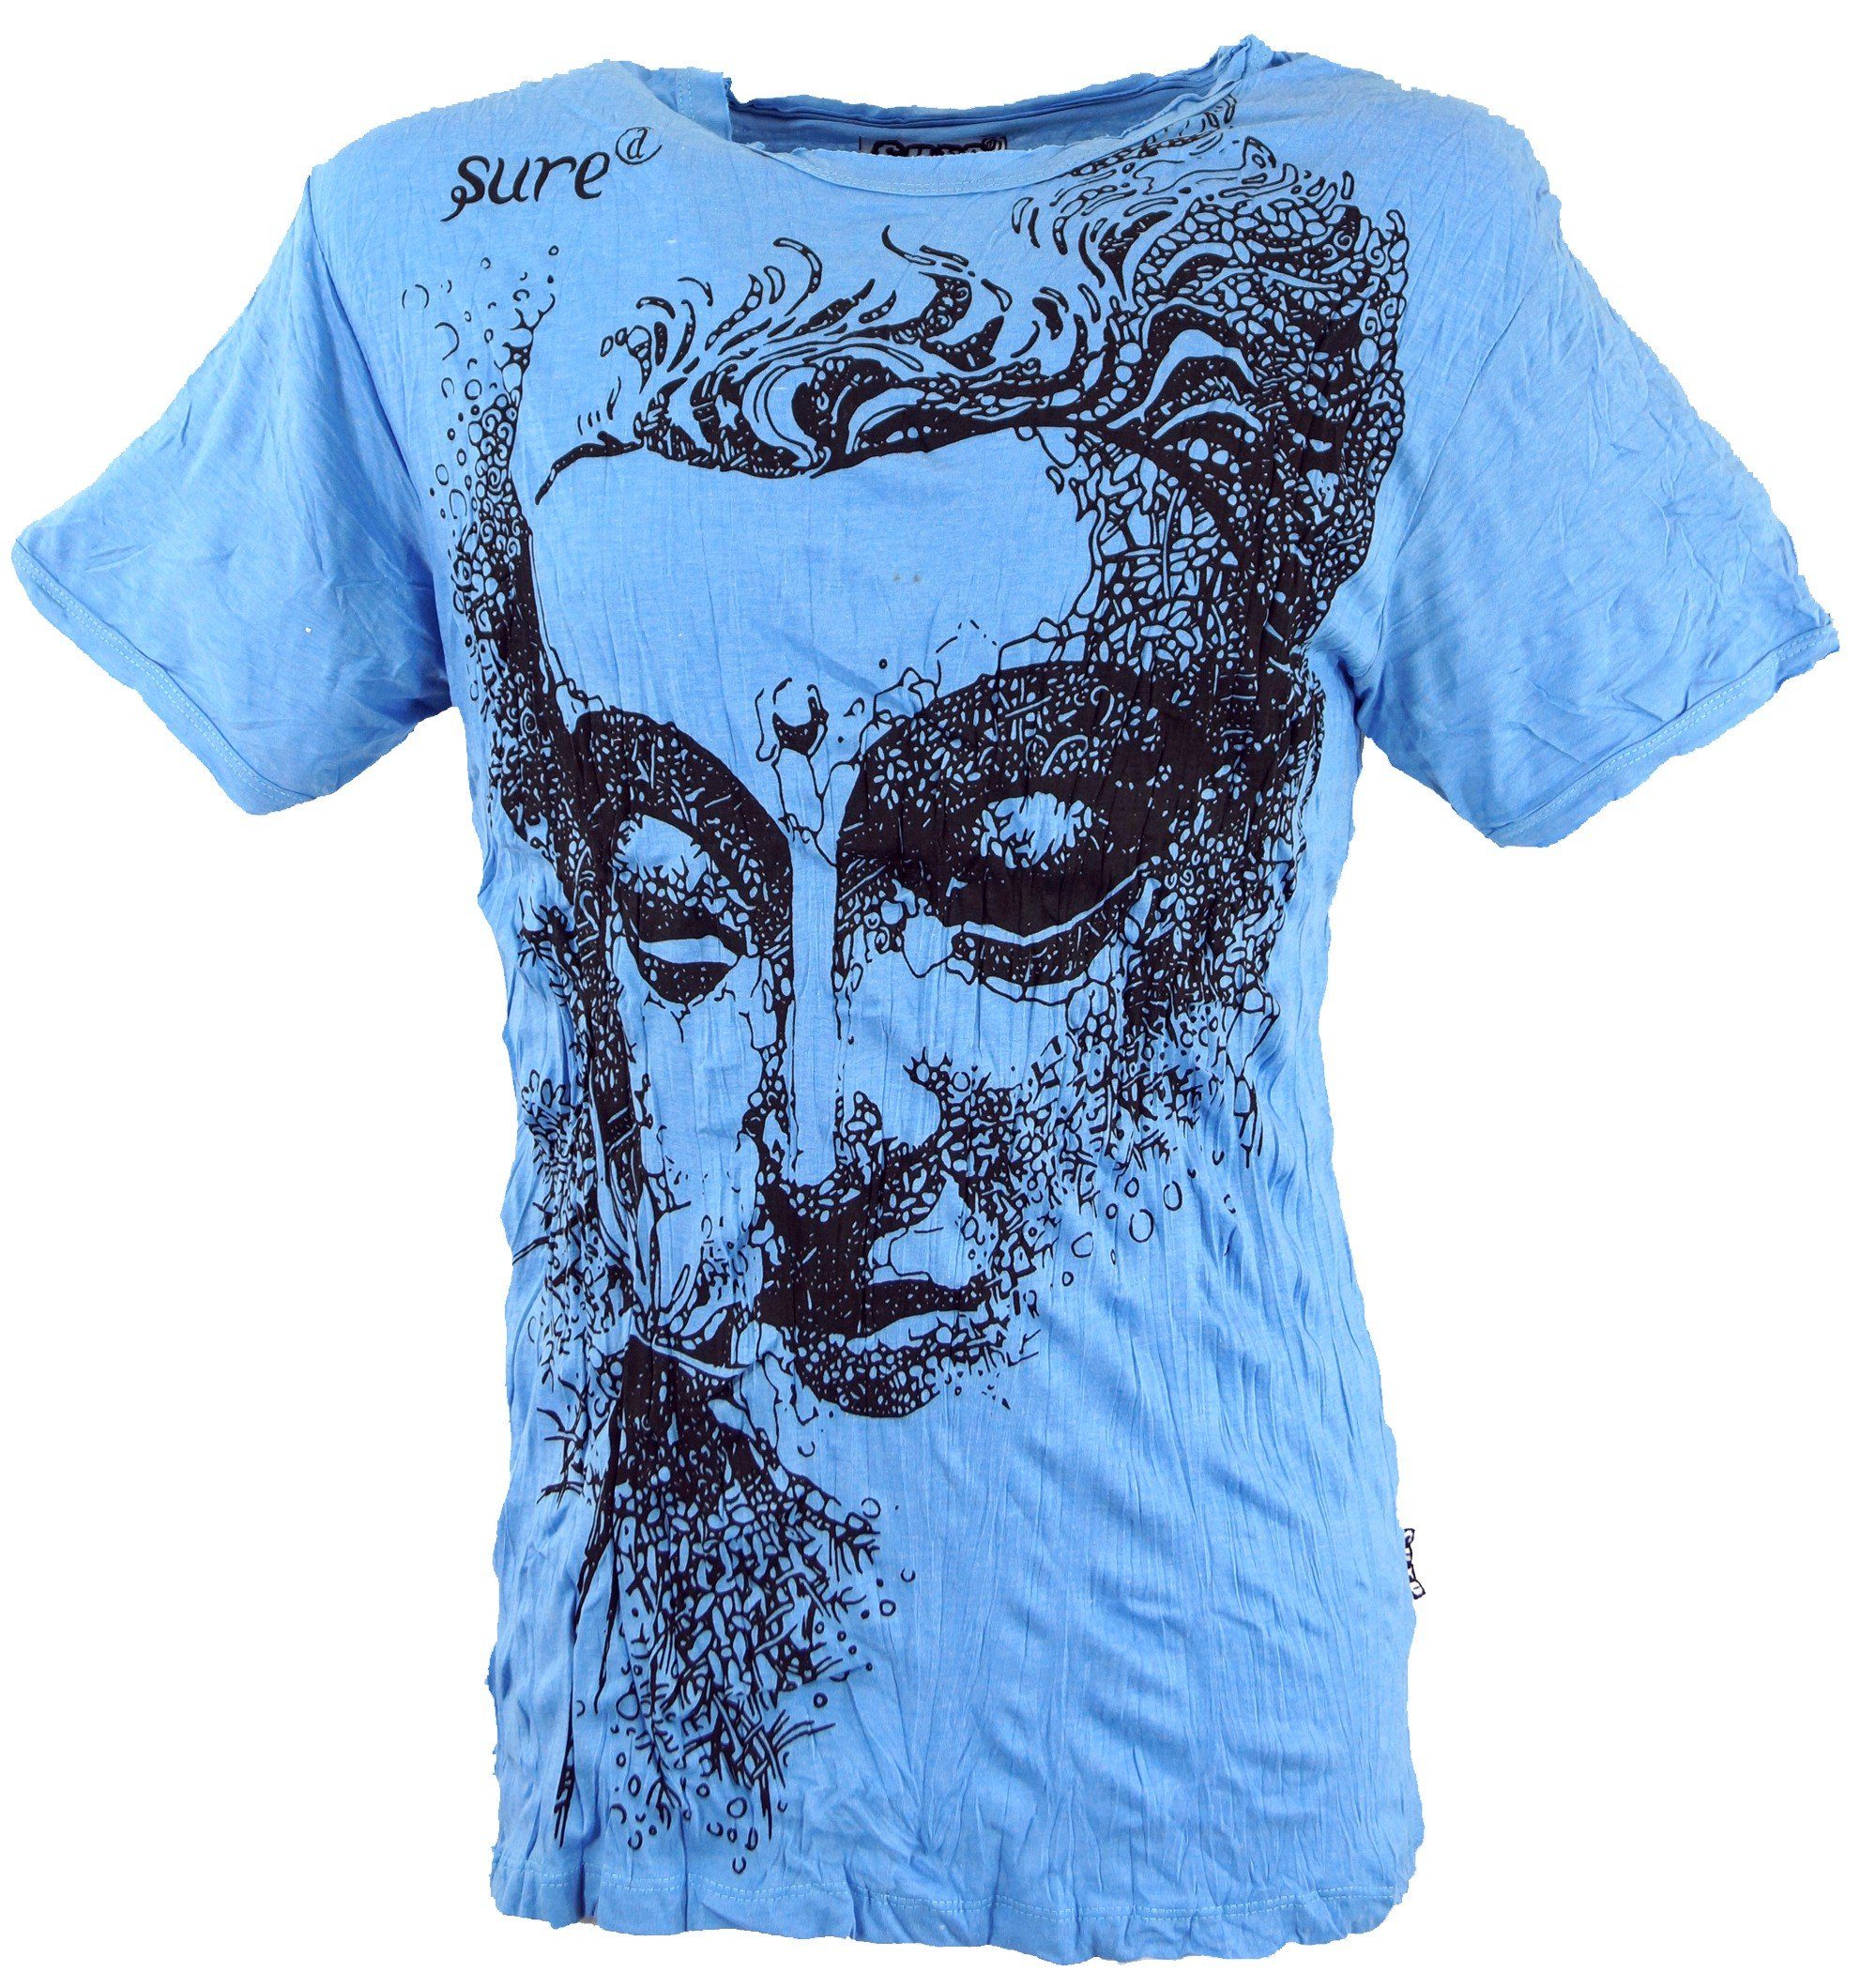 Guru-Shop T-Shirt Sure T-Shirt Style, hellblau alternative Buddha - Festival, Bekleidung Goa